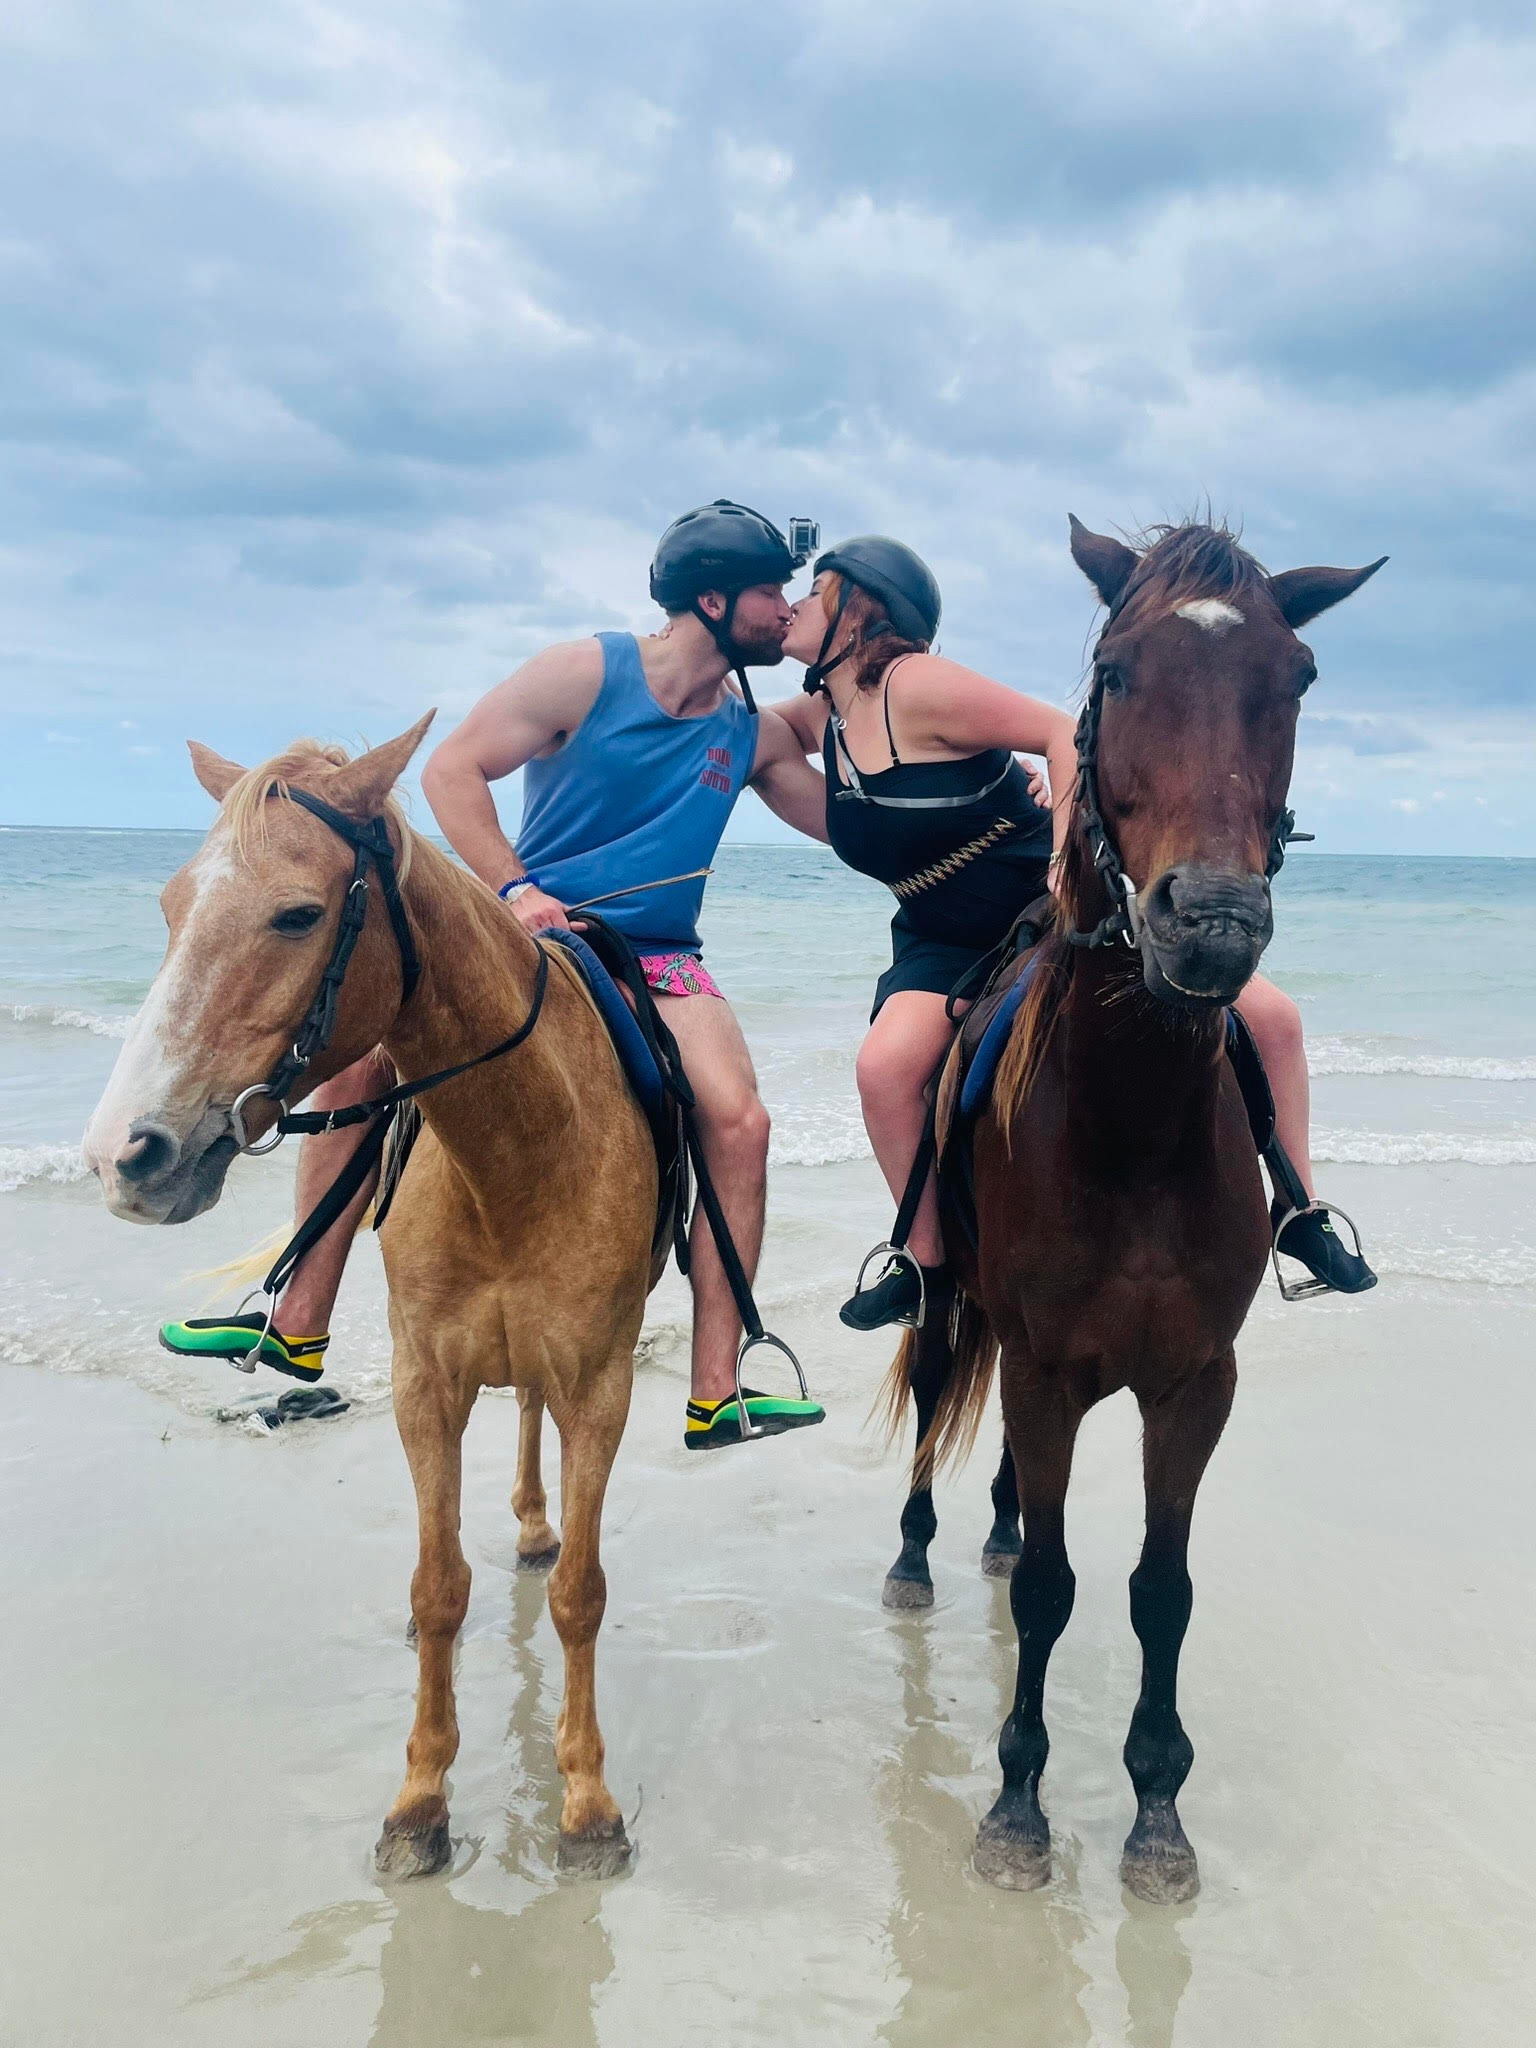 Savanna & Conner kissing on horseback